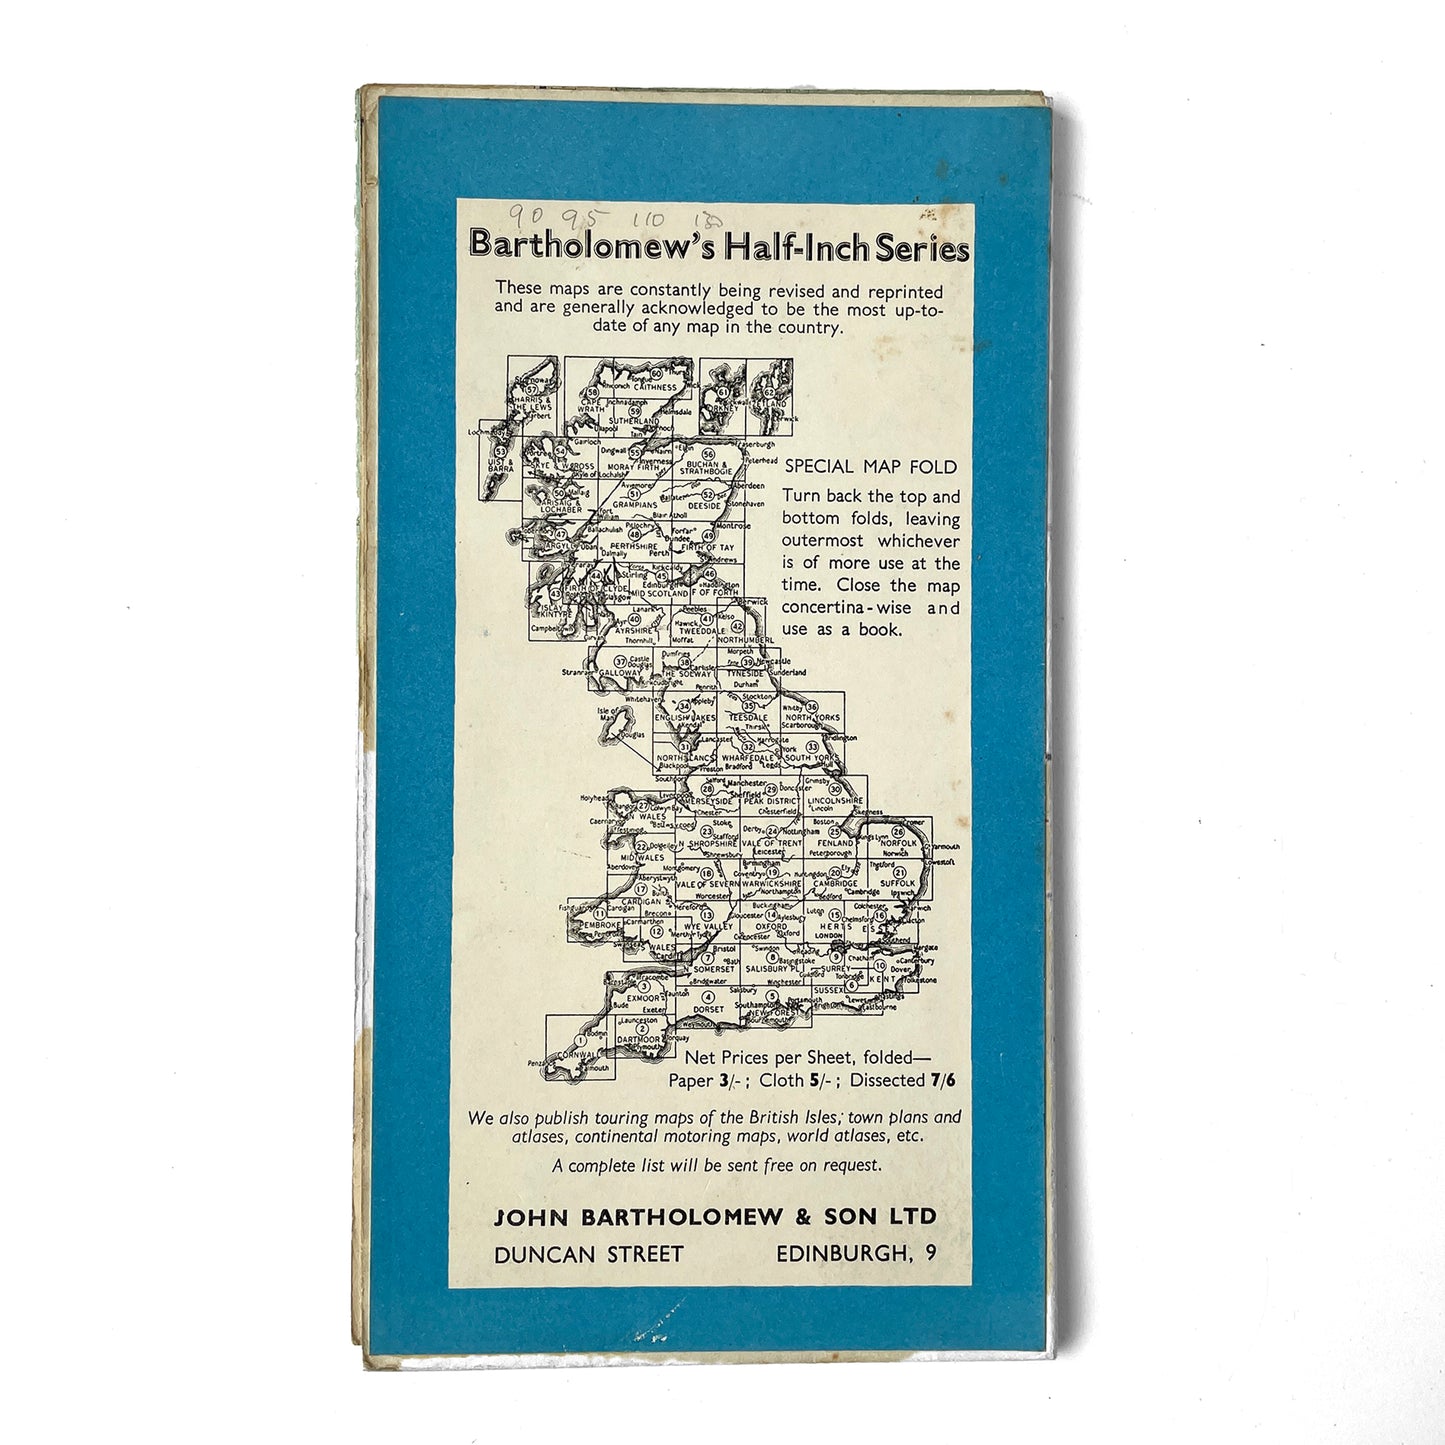 1955 Batholomew’s Map of the New Forest